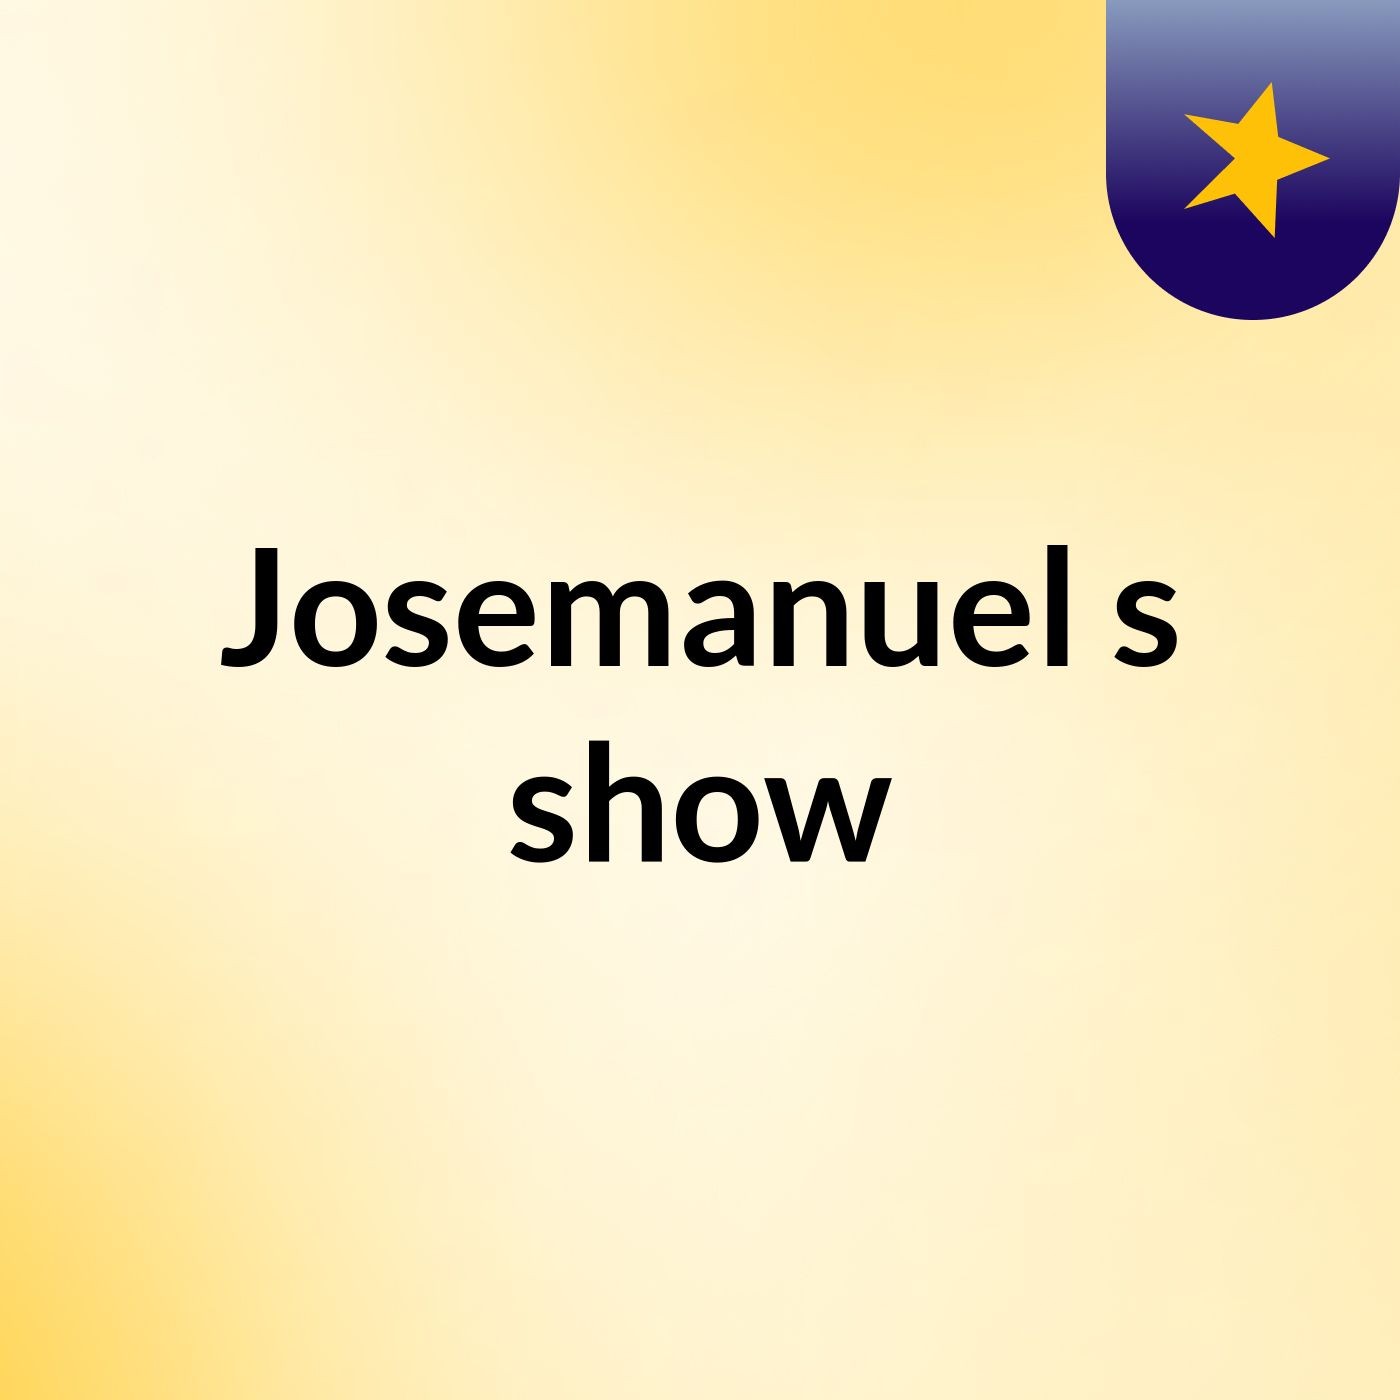 Josemanuel's show